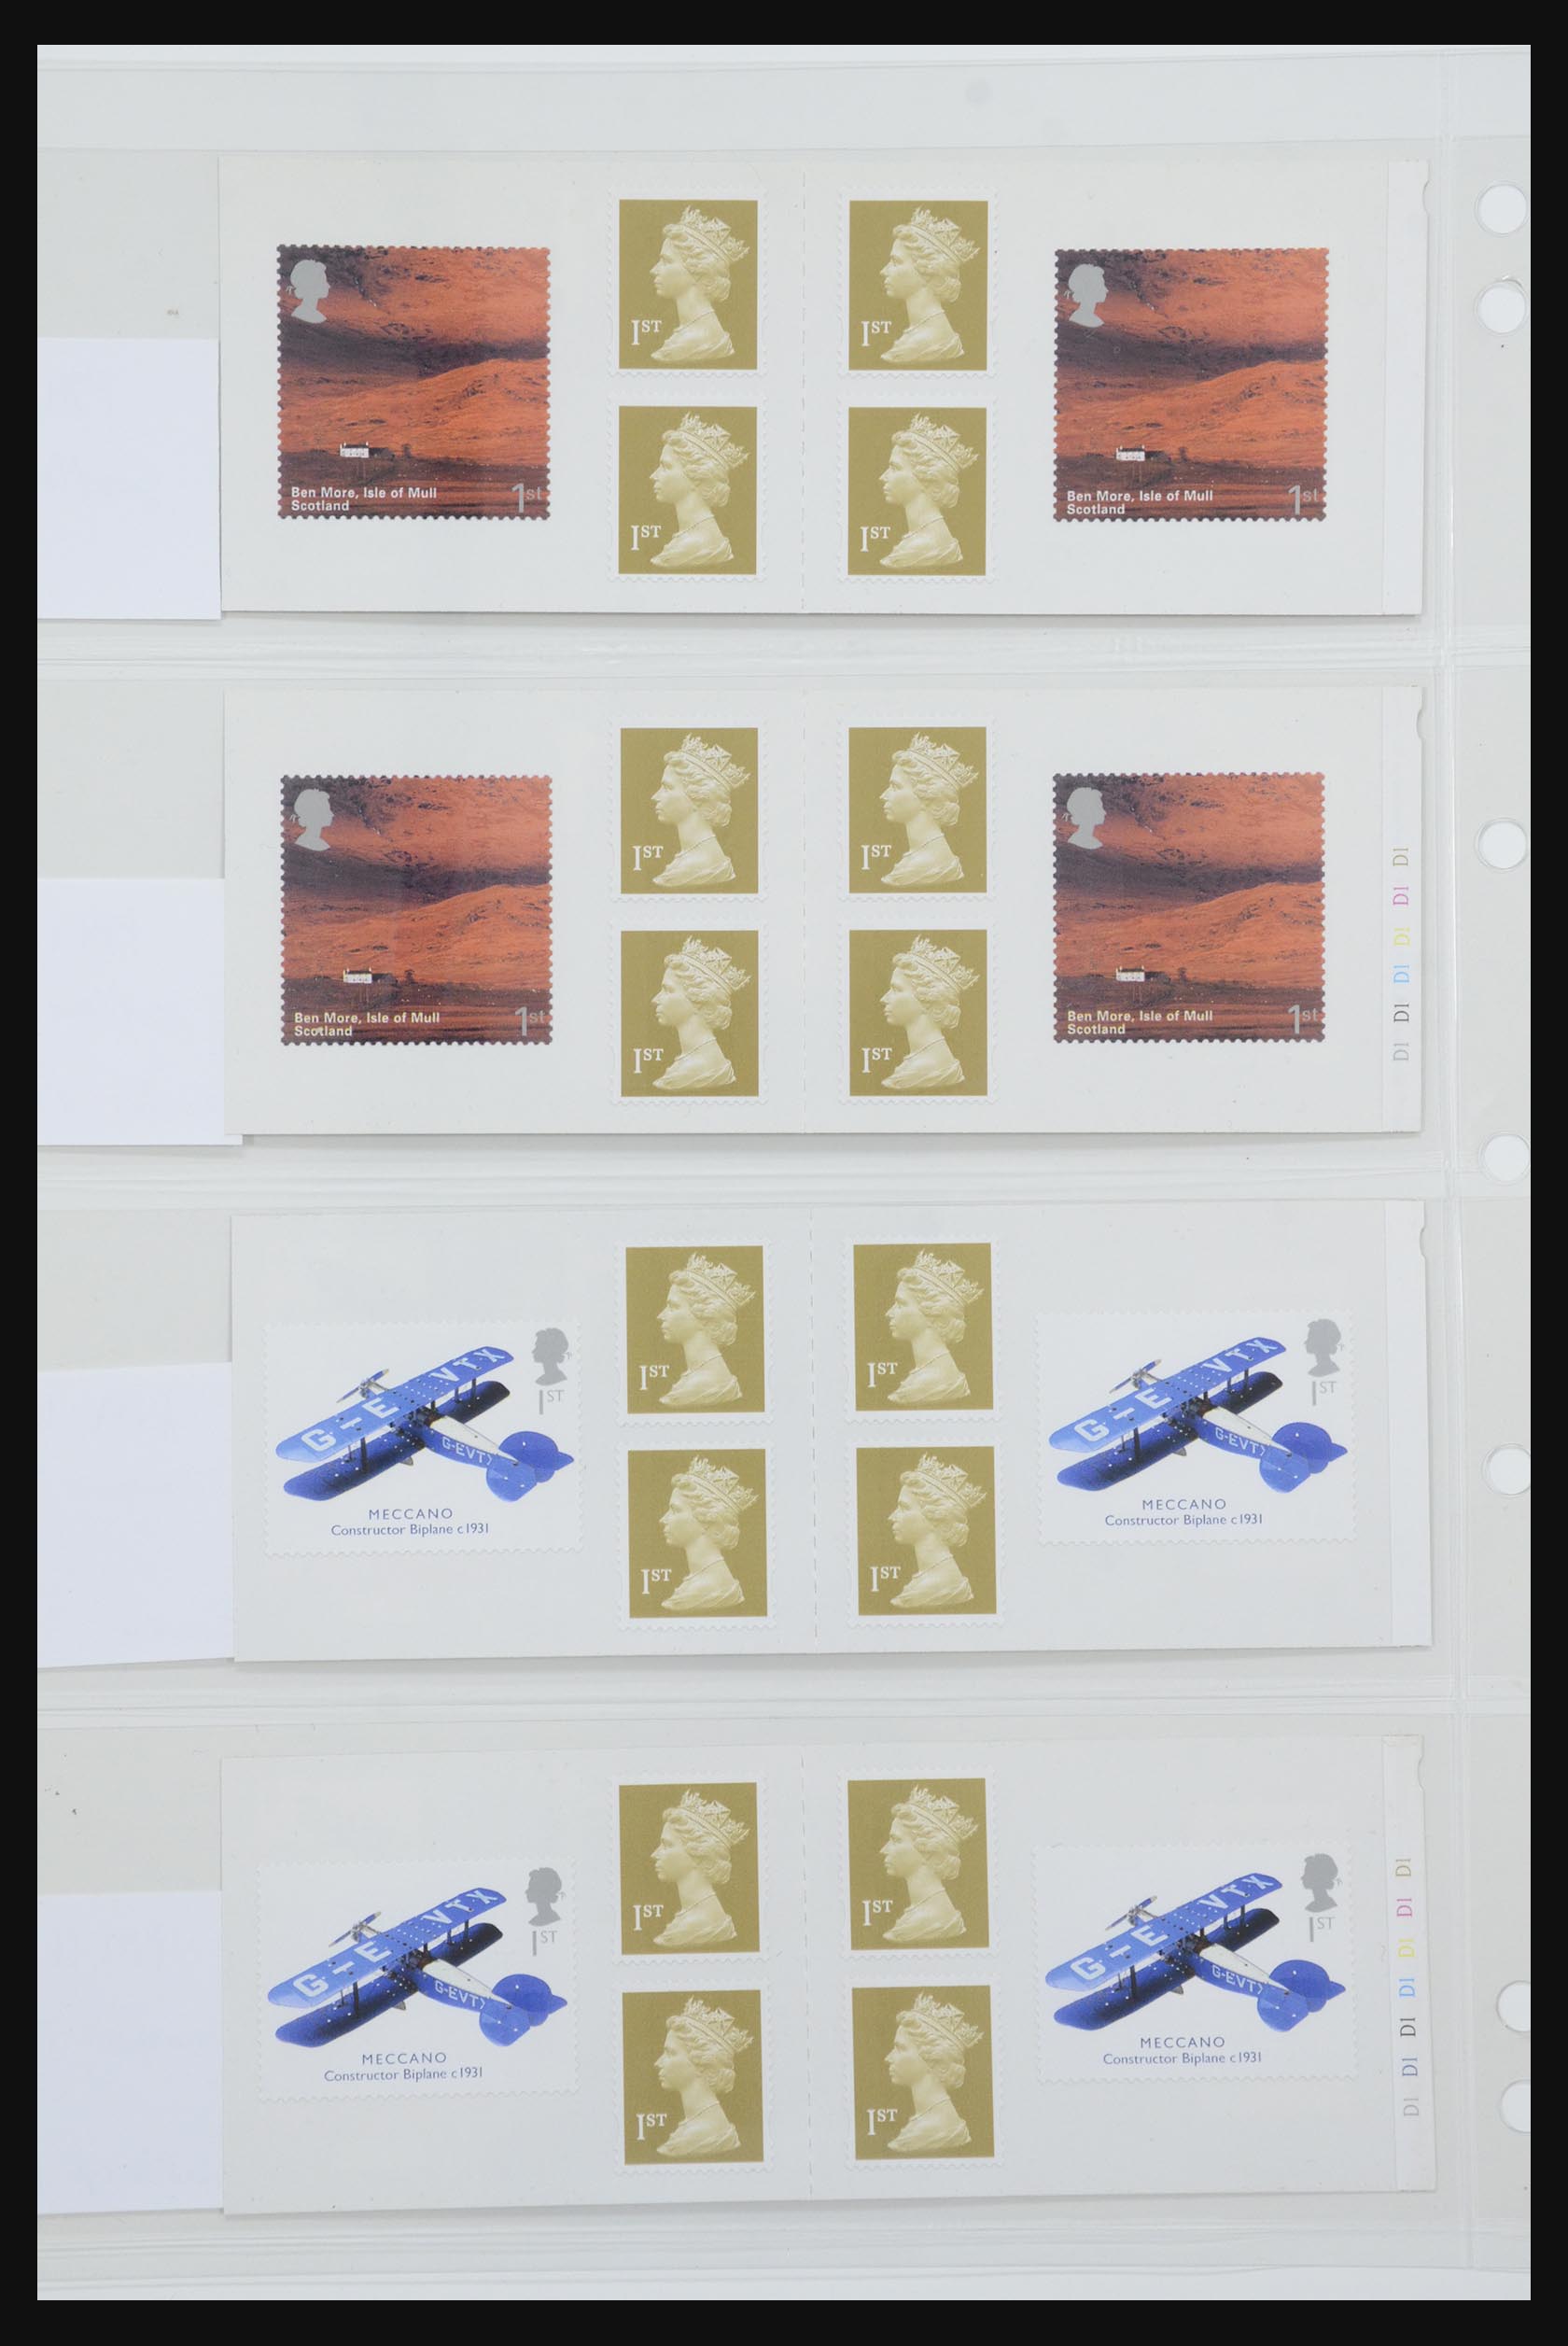 31959 372 - 31959 Great Britain stampbooklets 1987-2016!!